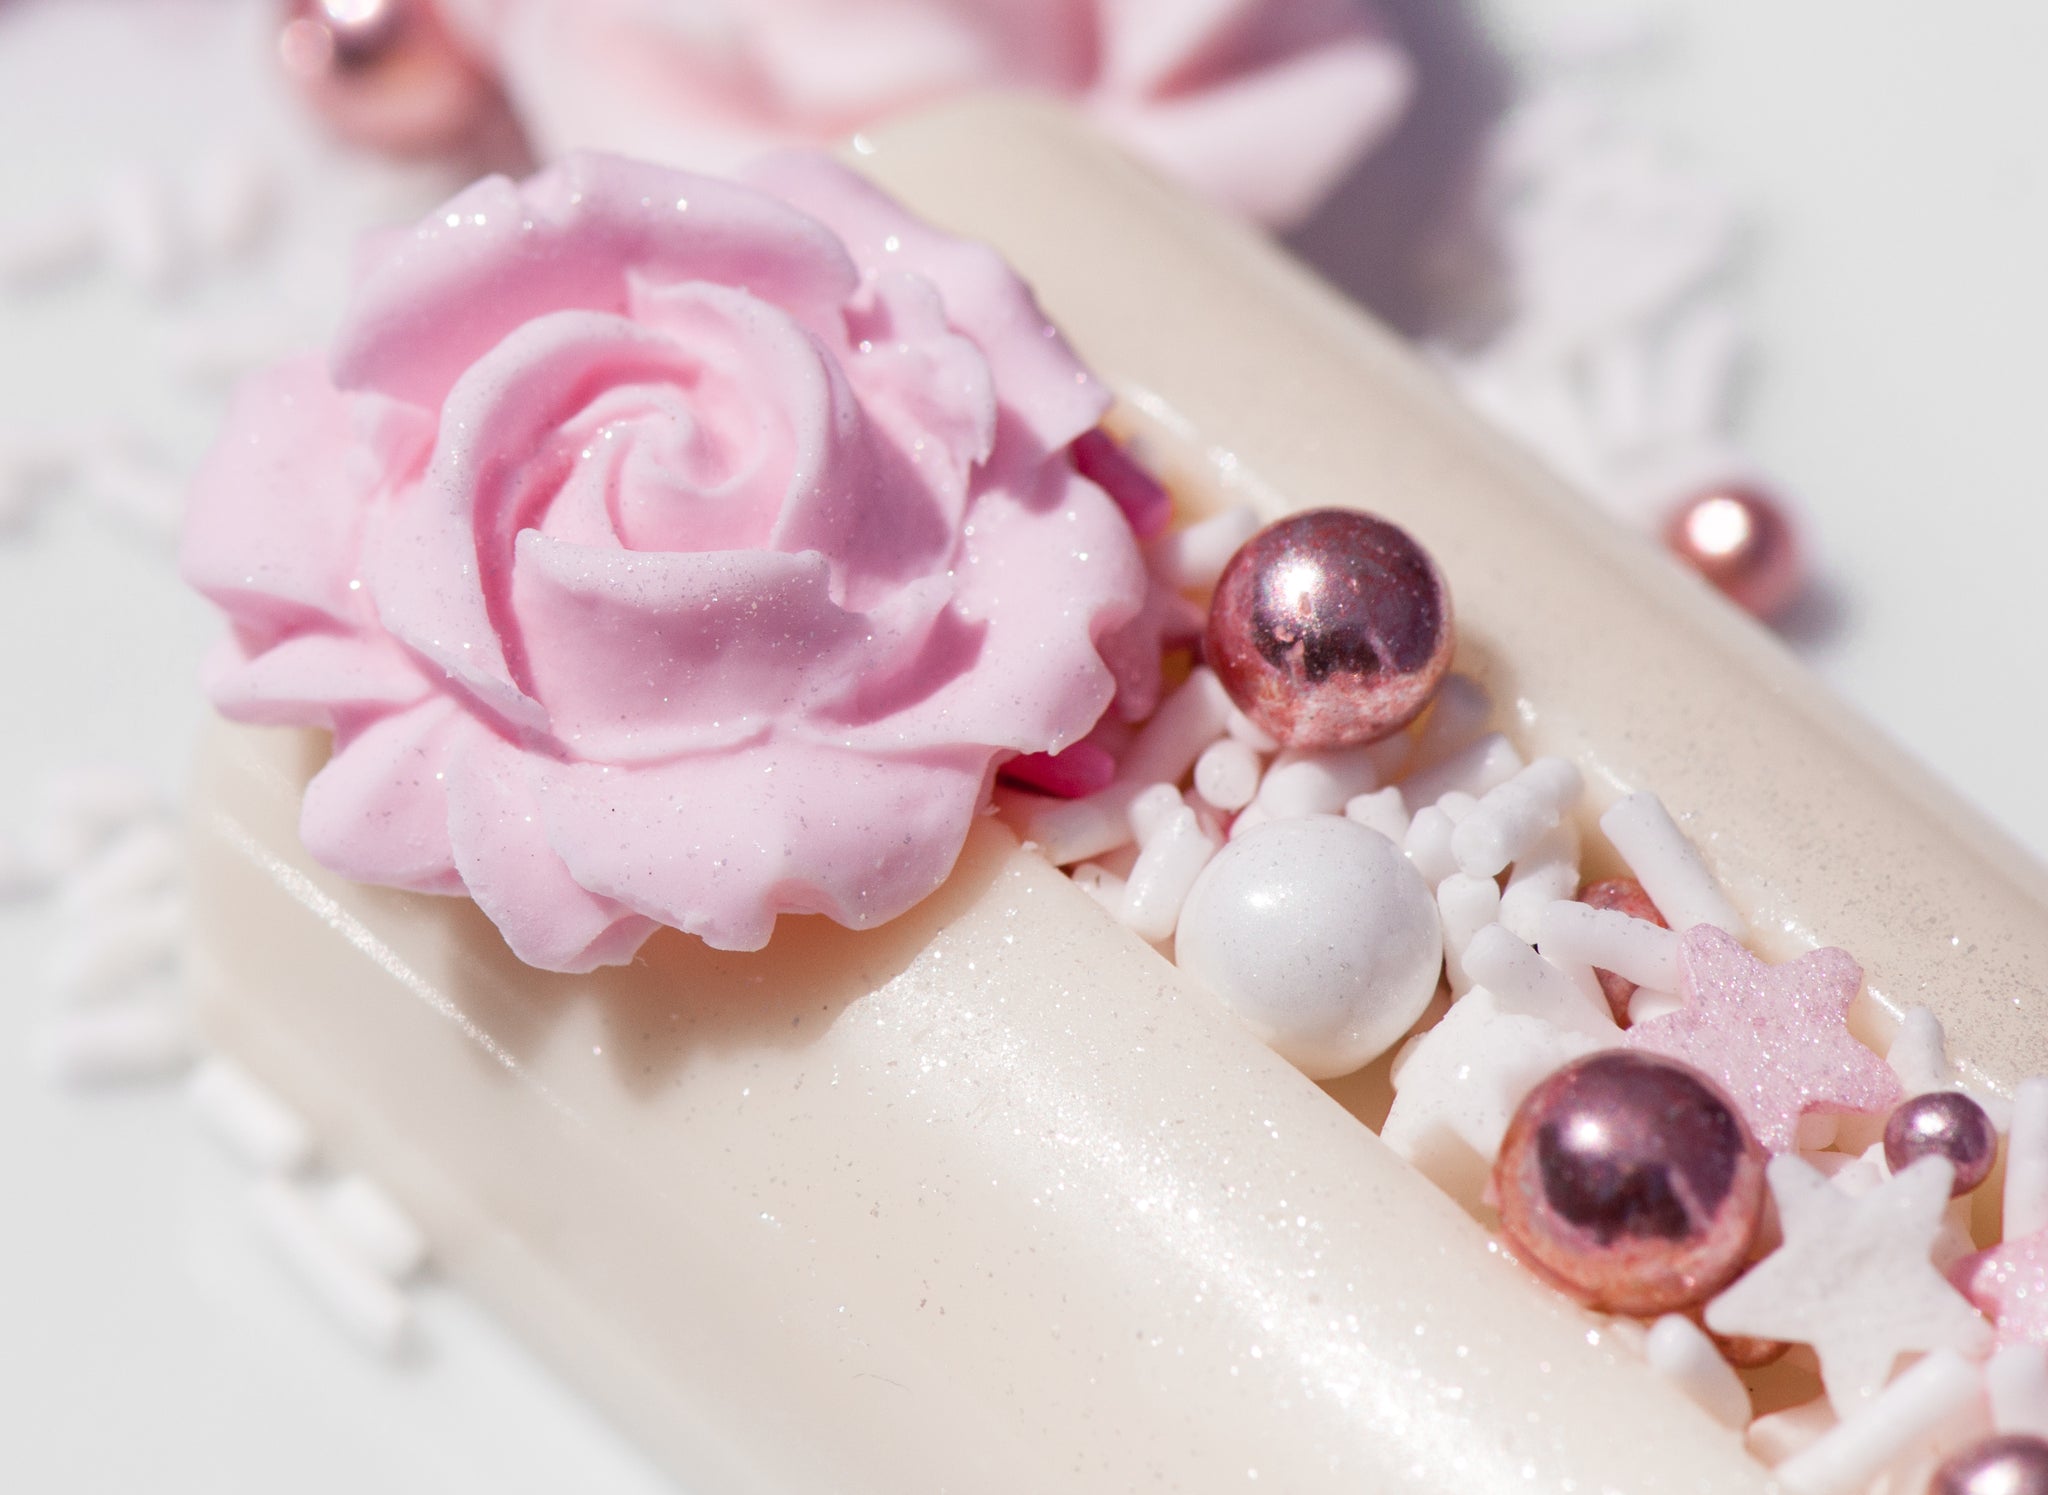 1 Rose Mold Style 2 – My Little Cakepop, llc